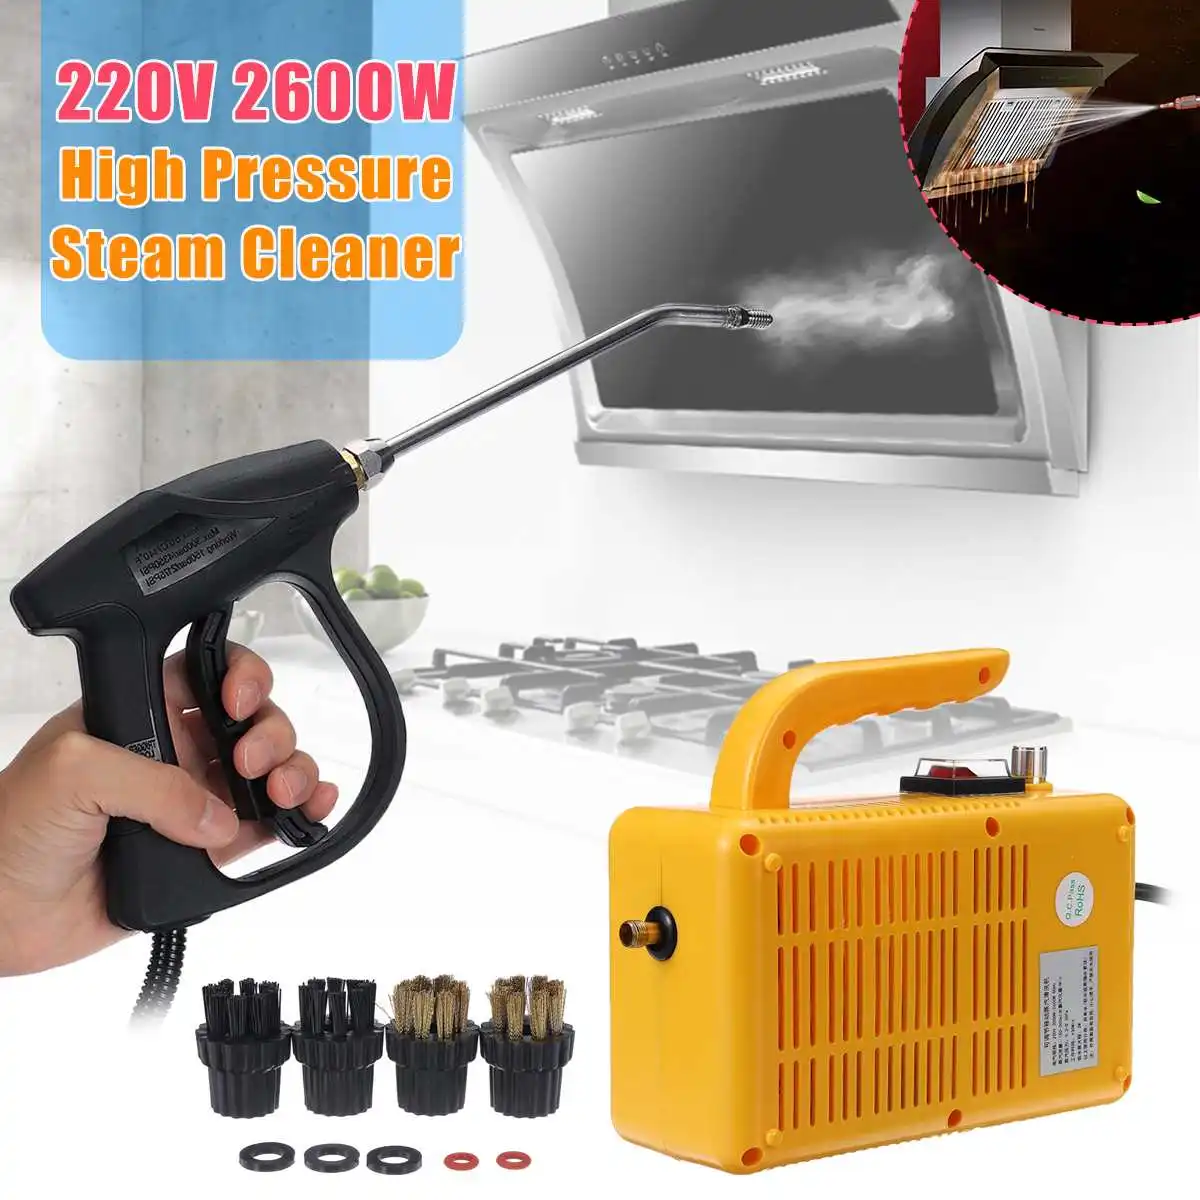 Фото Steam Cleaner 220V 2600W High Pressure Portable Electric Cleaning Machine Household Pumping Sterilization | Бытовая техника